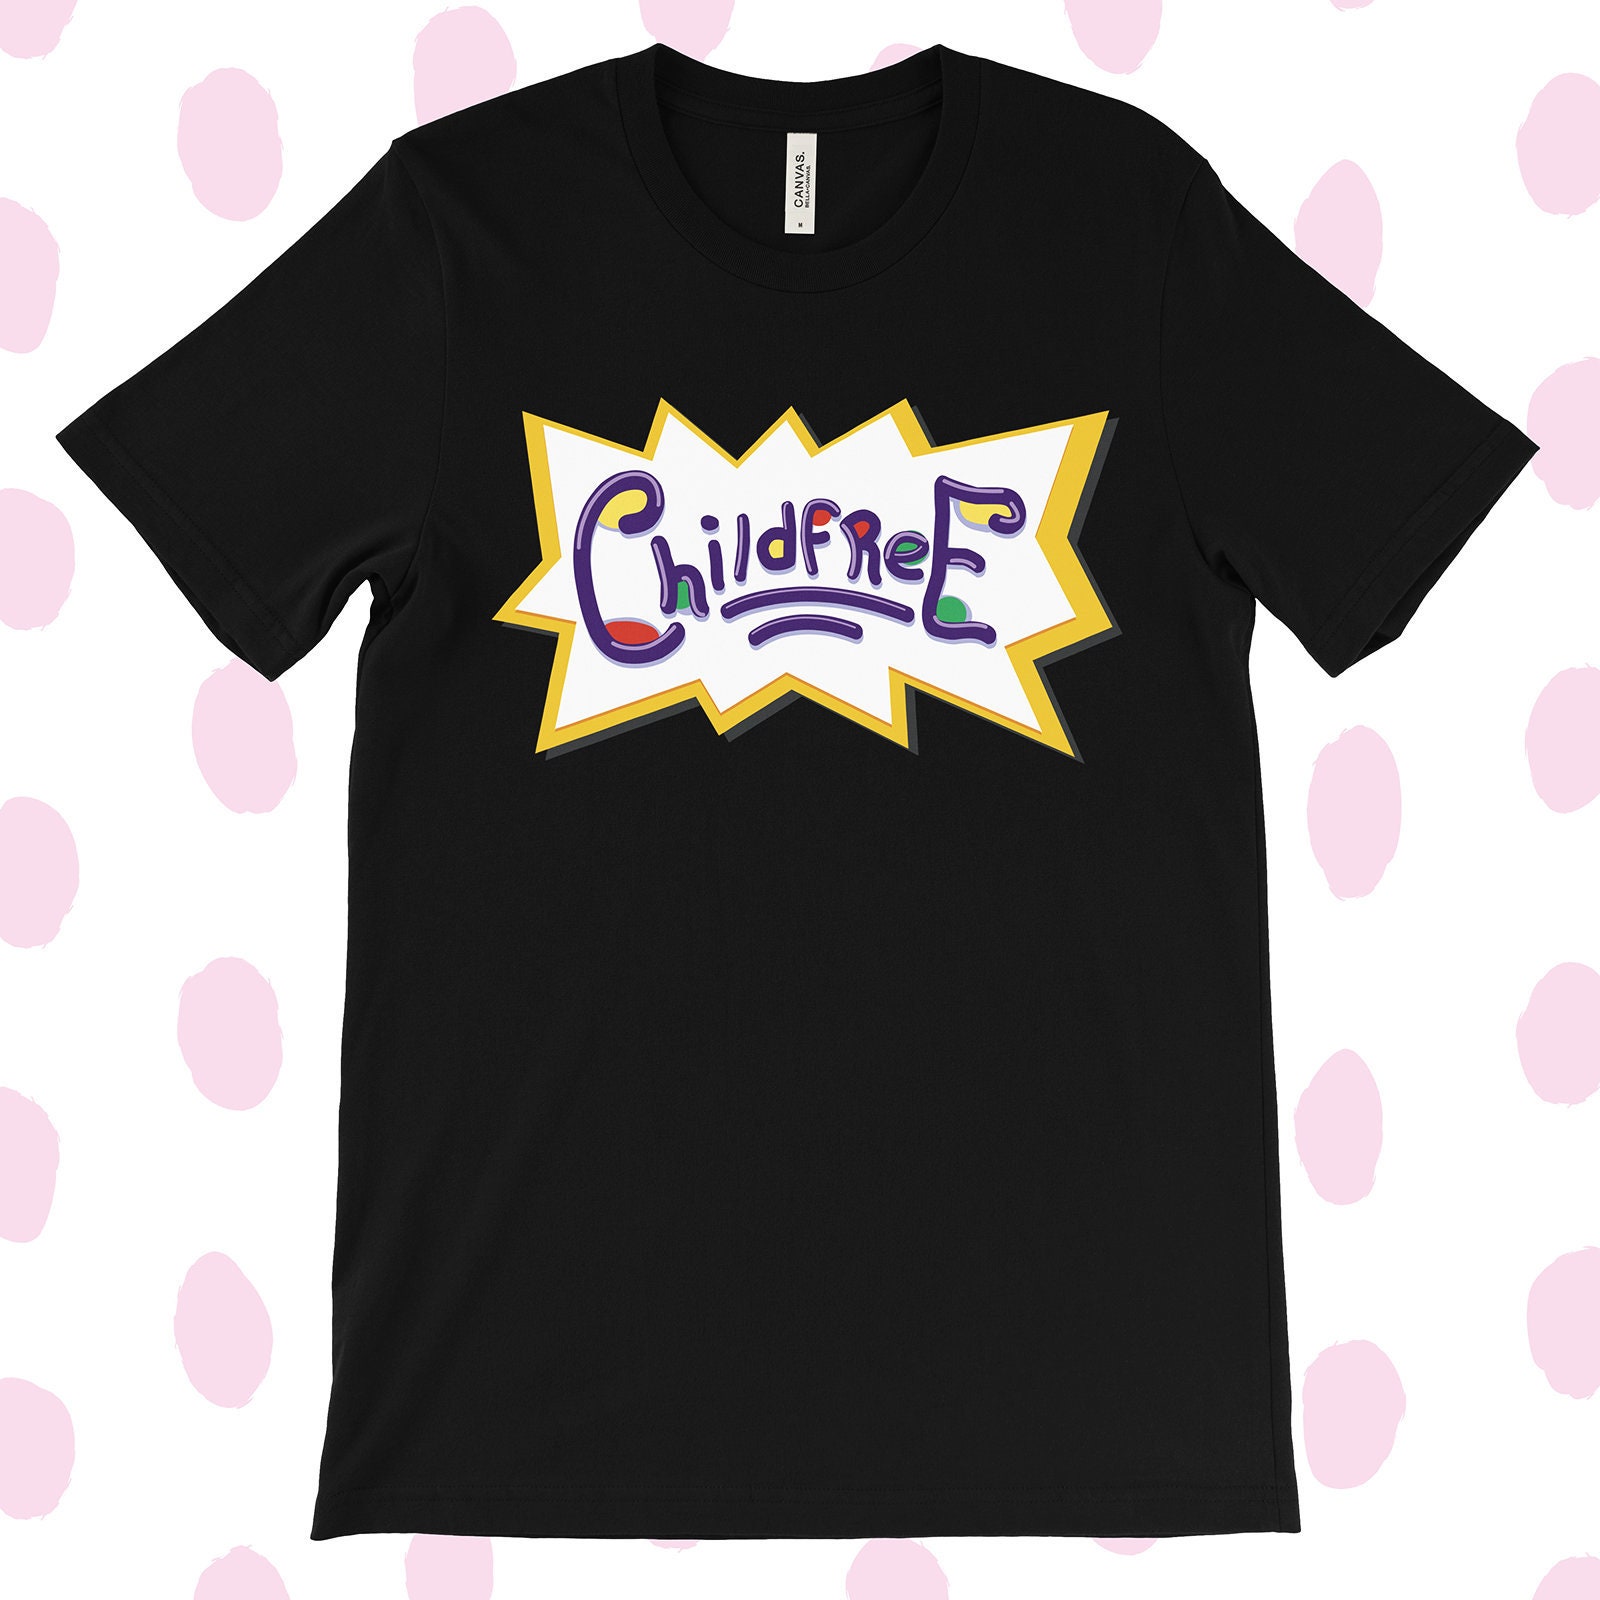 Unisex Childfree Rugrats Inspired Theme 90s Nostalgia Parody Funny Sarcastic TV Feminist Cartoon Graphic Millennial Retro Logo T-Shirt